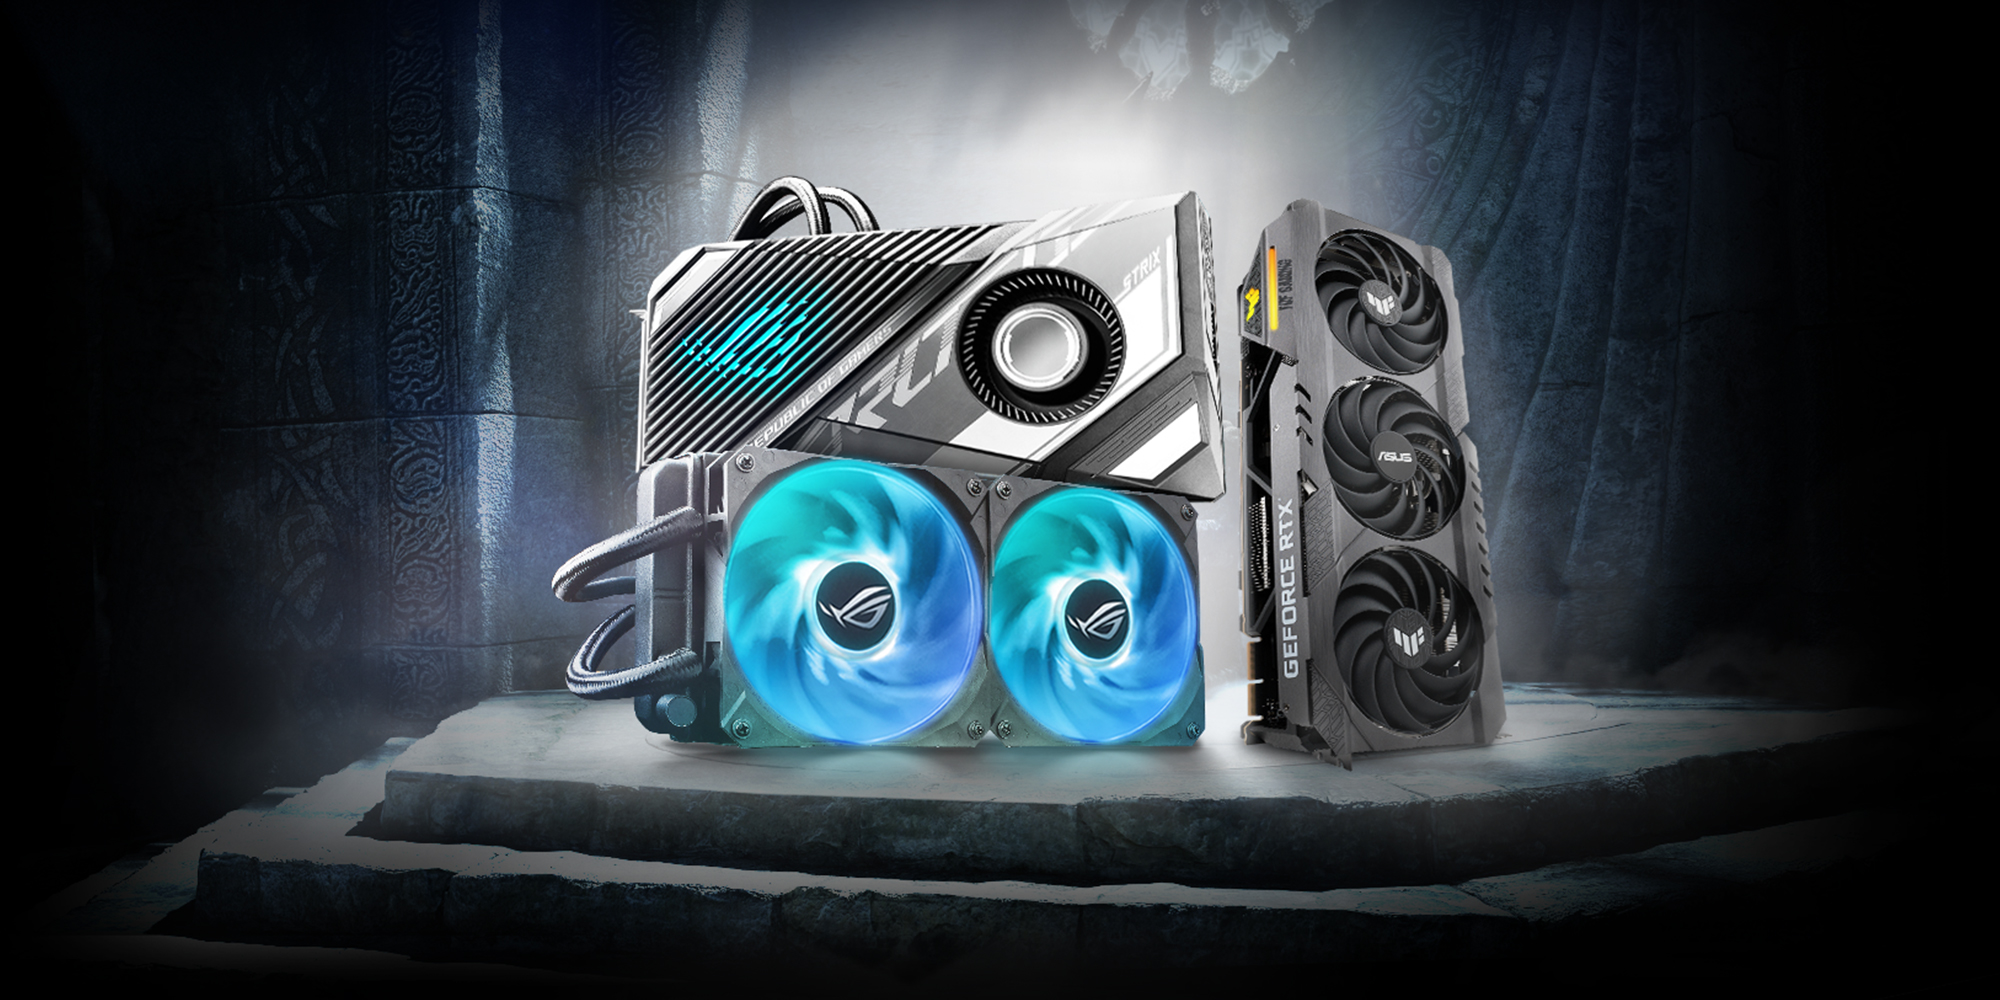 Az Asus két új Geforce Rtx 3090 Ti sorozatú GPU-t jelentett be